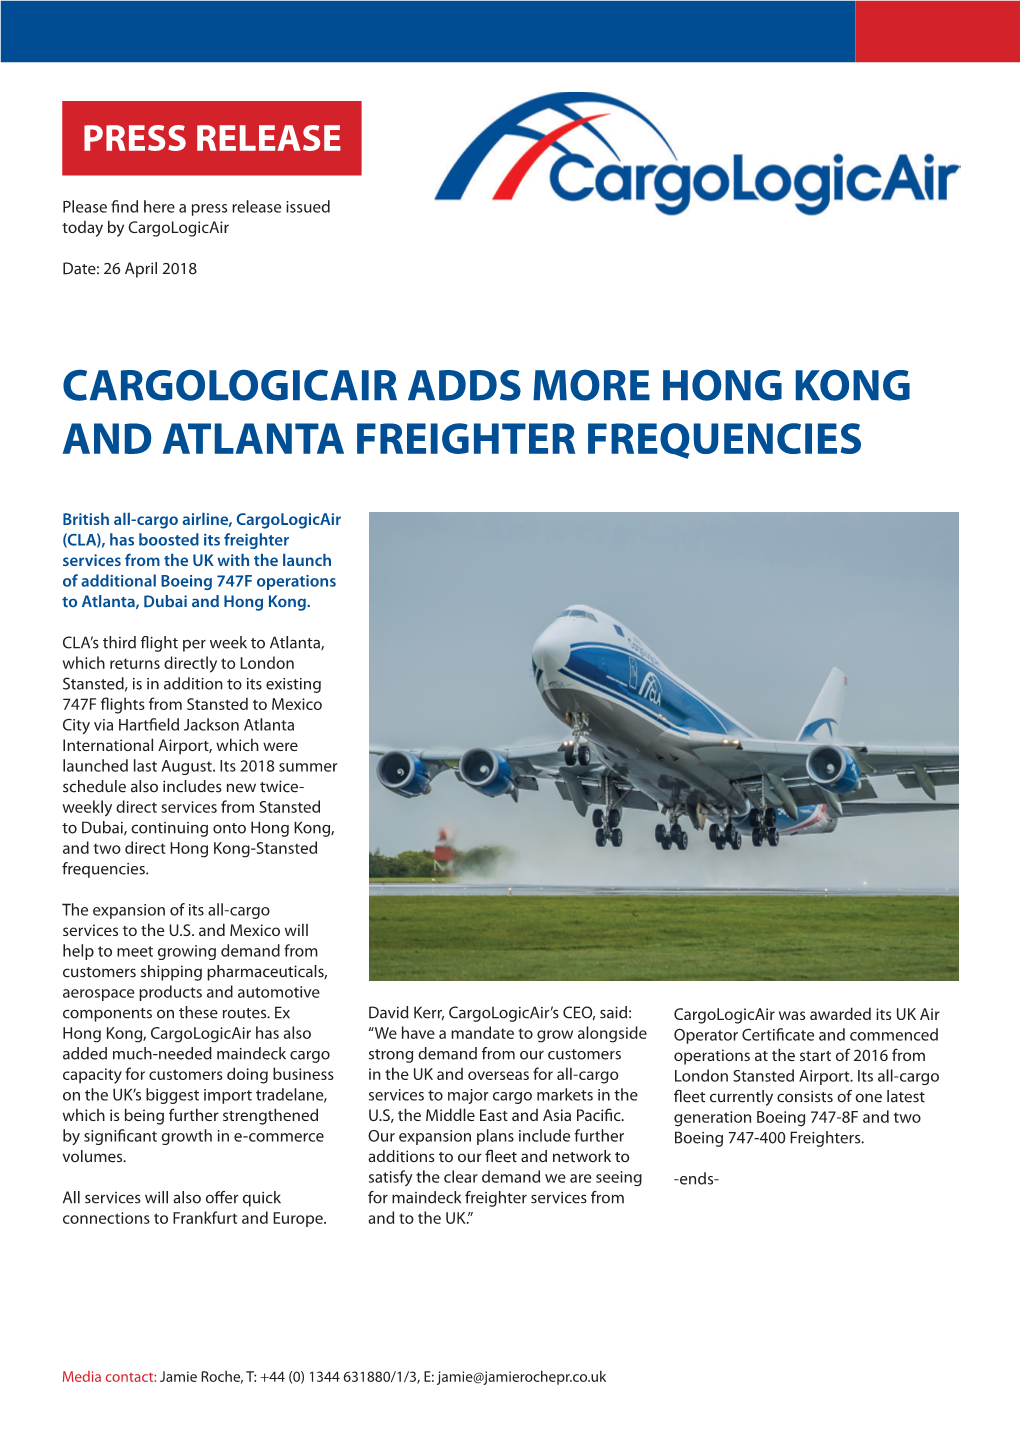 Cargologicair Adds More Hong Kong and Atlanta Freighter Frequencies